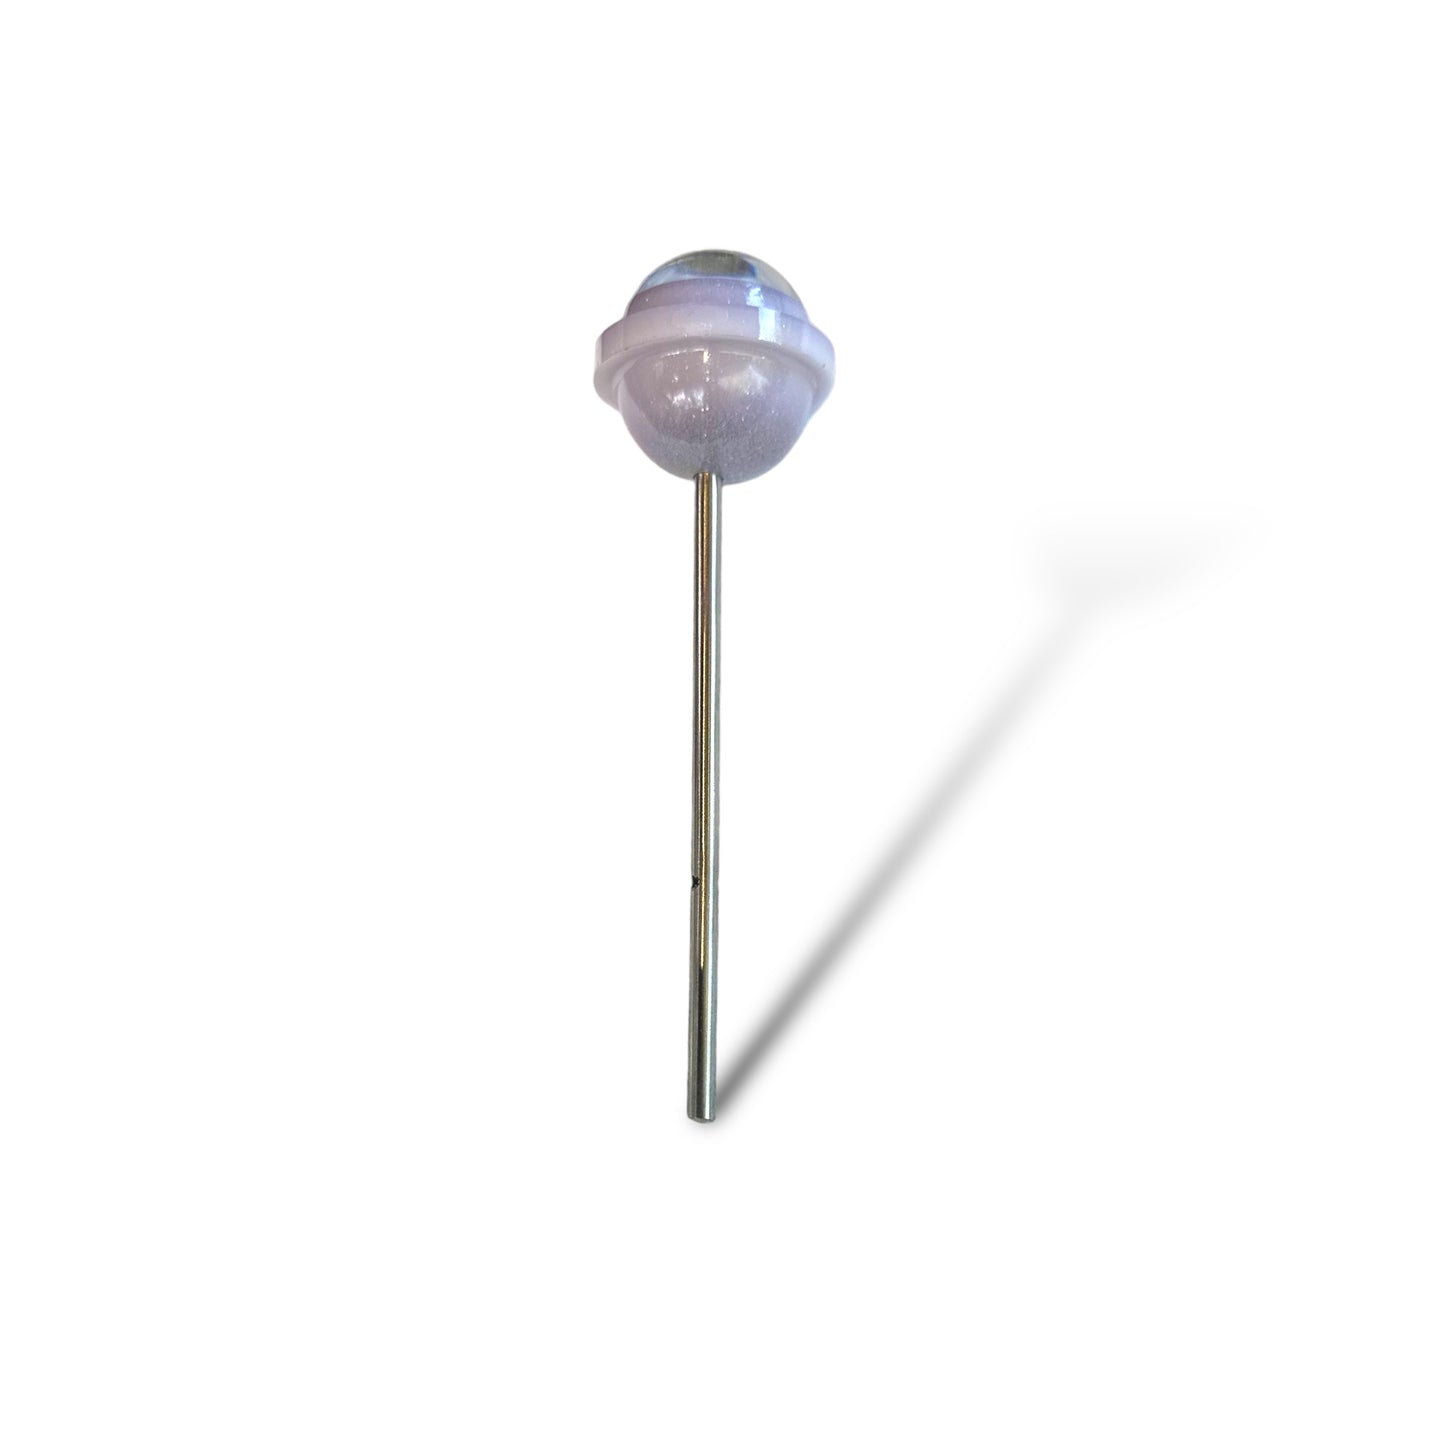 Very pery crown lollipop